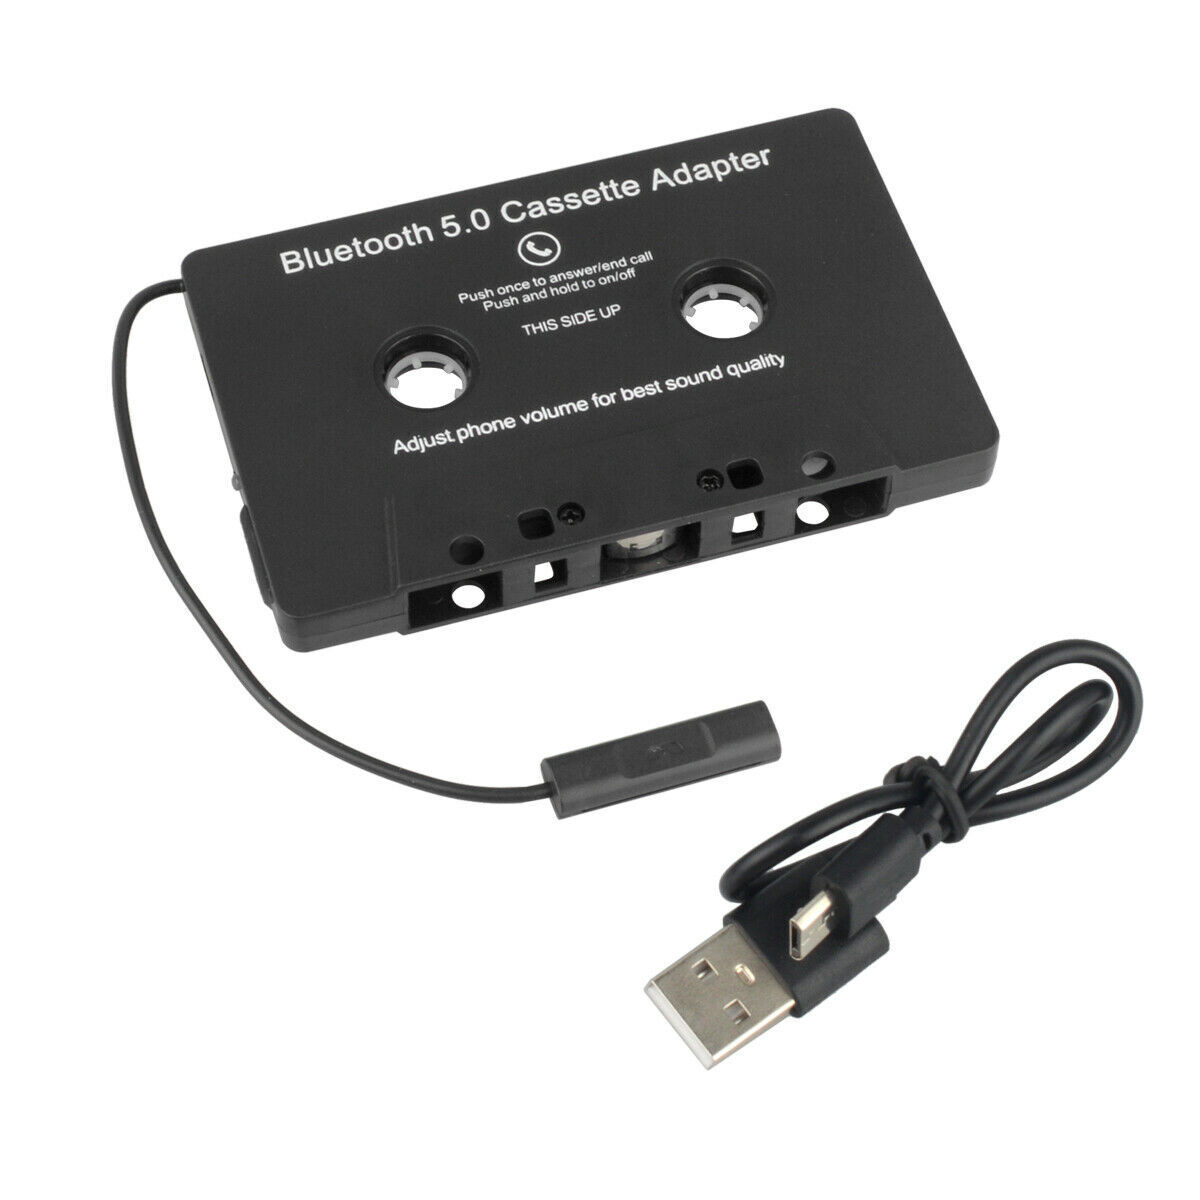 KFZ Kassetten Adapter für Autoradio, Auto Empfänger Bluetooth 5.0 Audio  Kassette